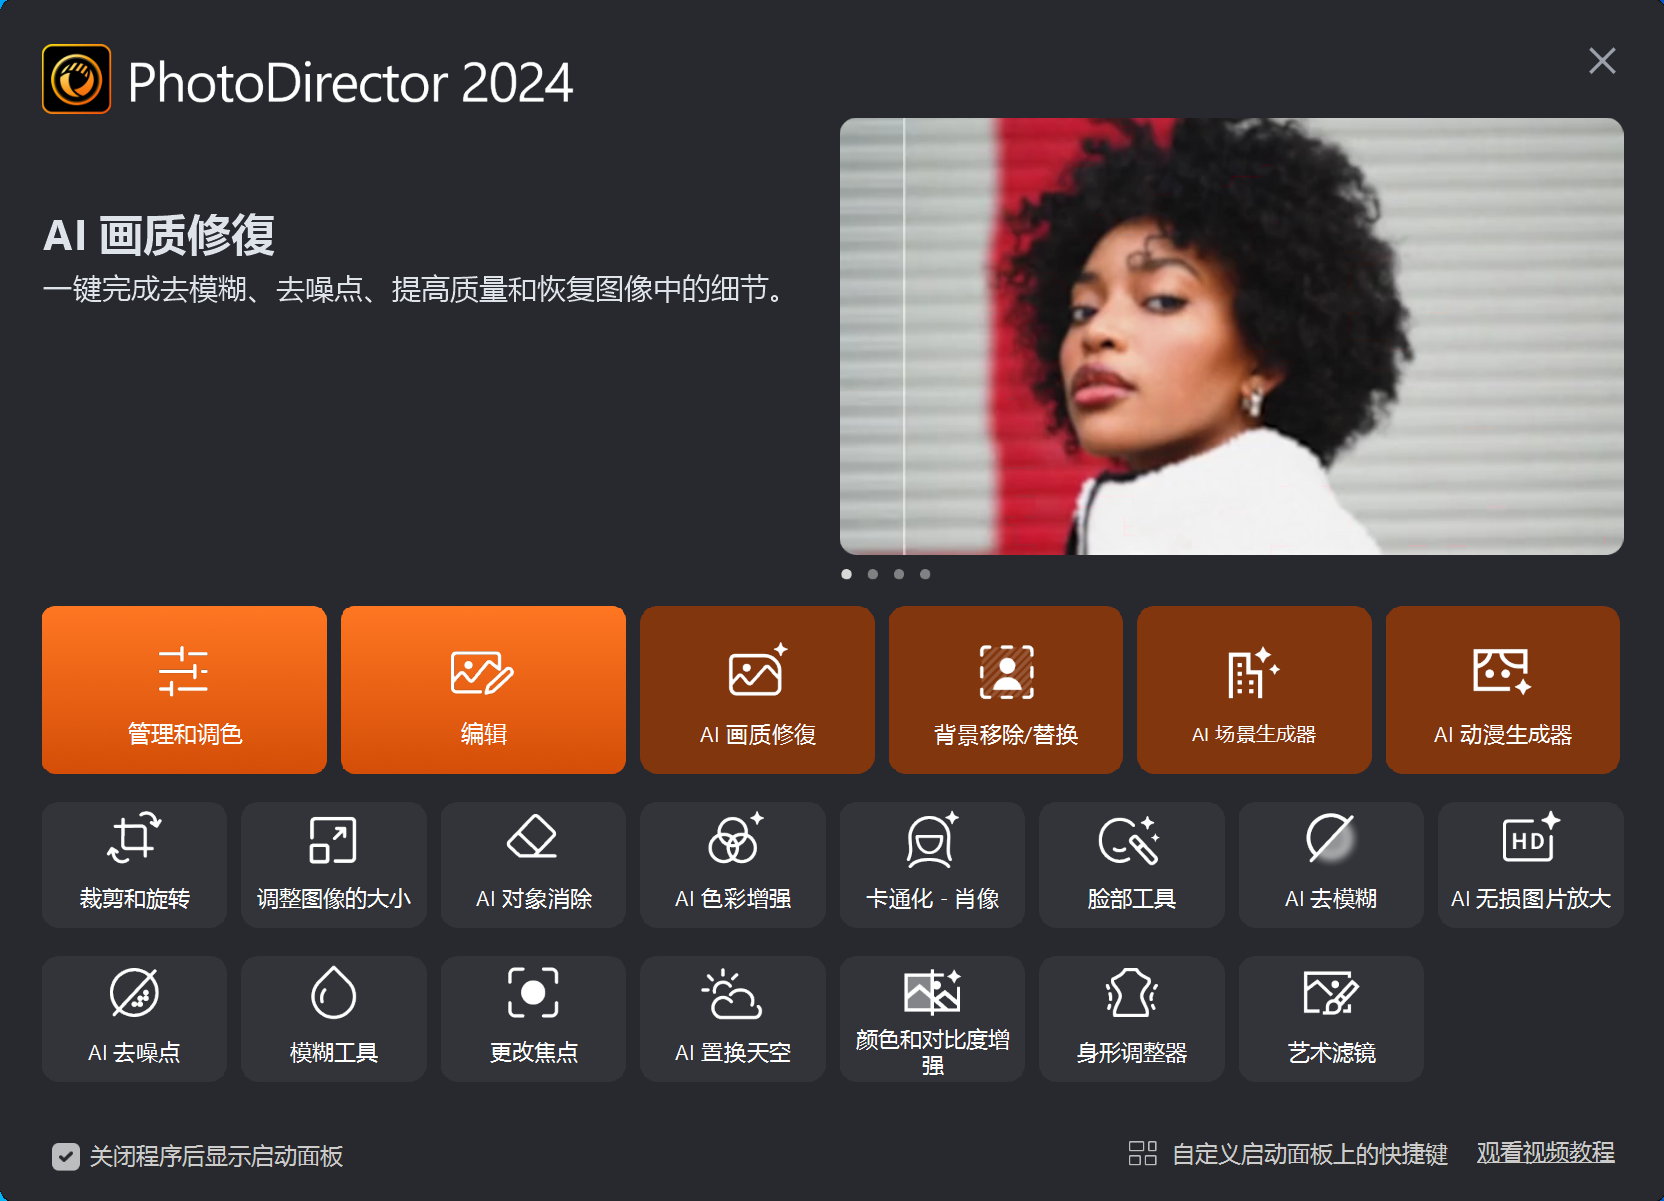 CyberLink PhotoDirector Ultra 2024 v15.3.1528.0 x64 Multilingual 中文注册版